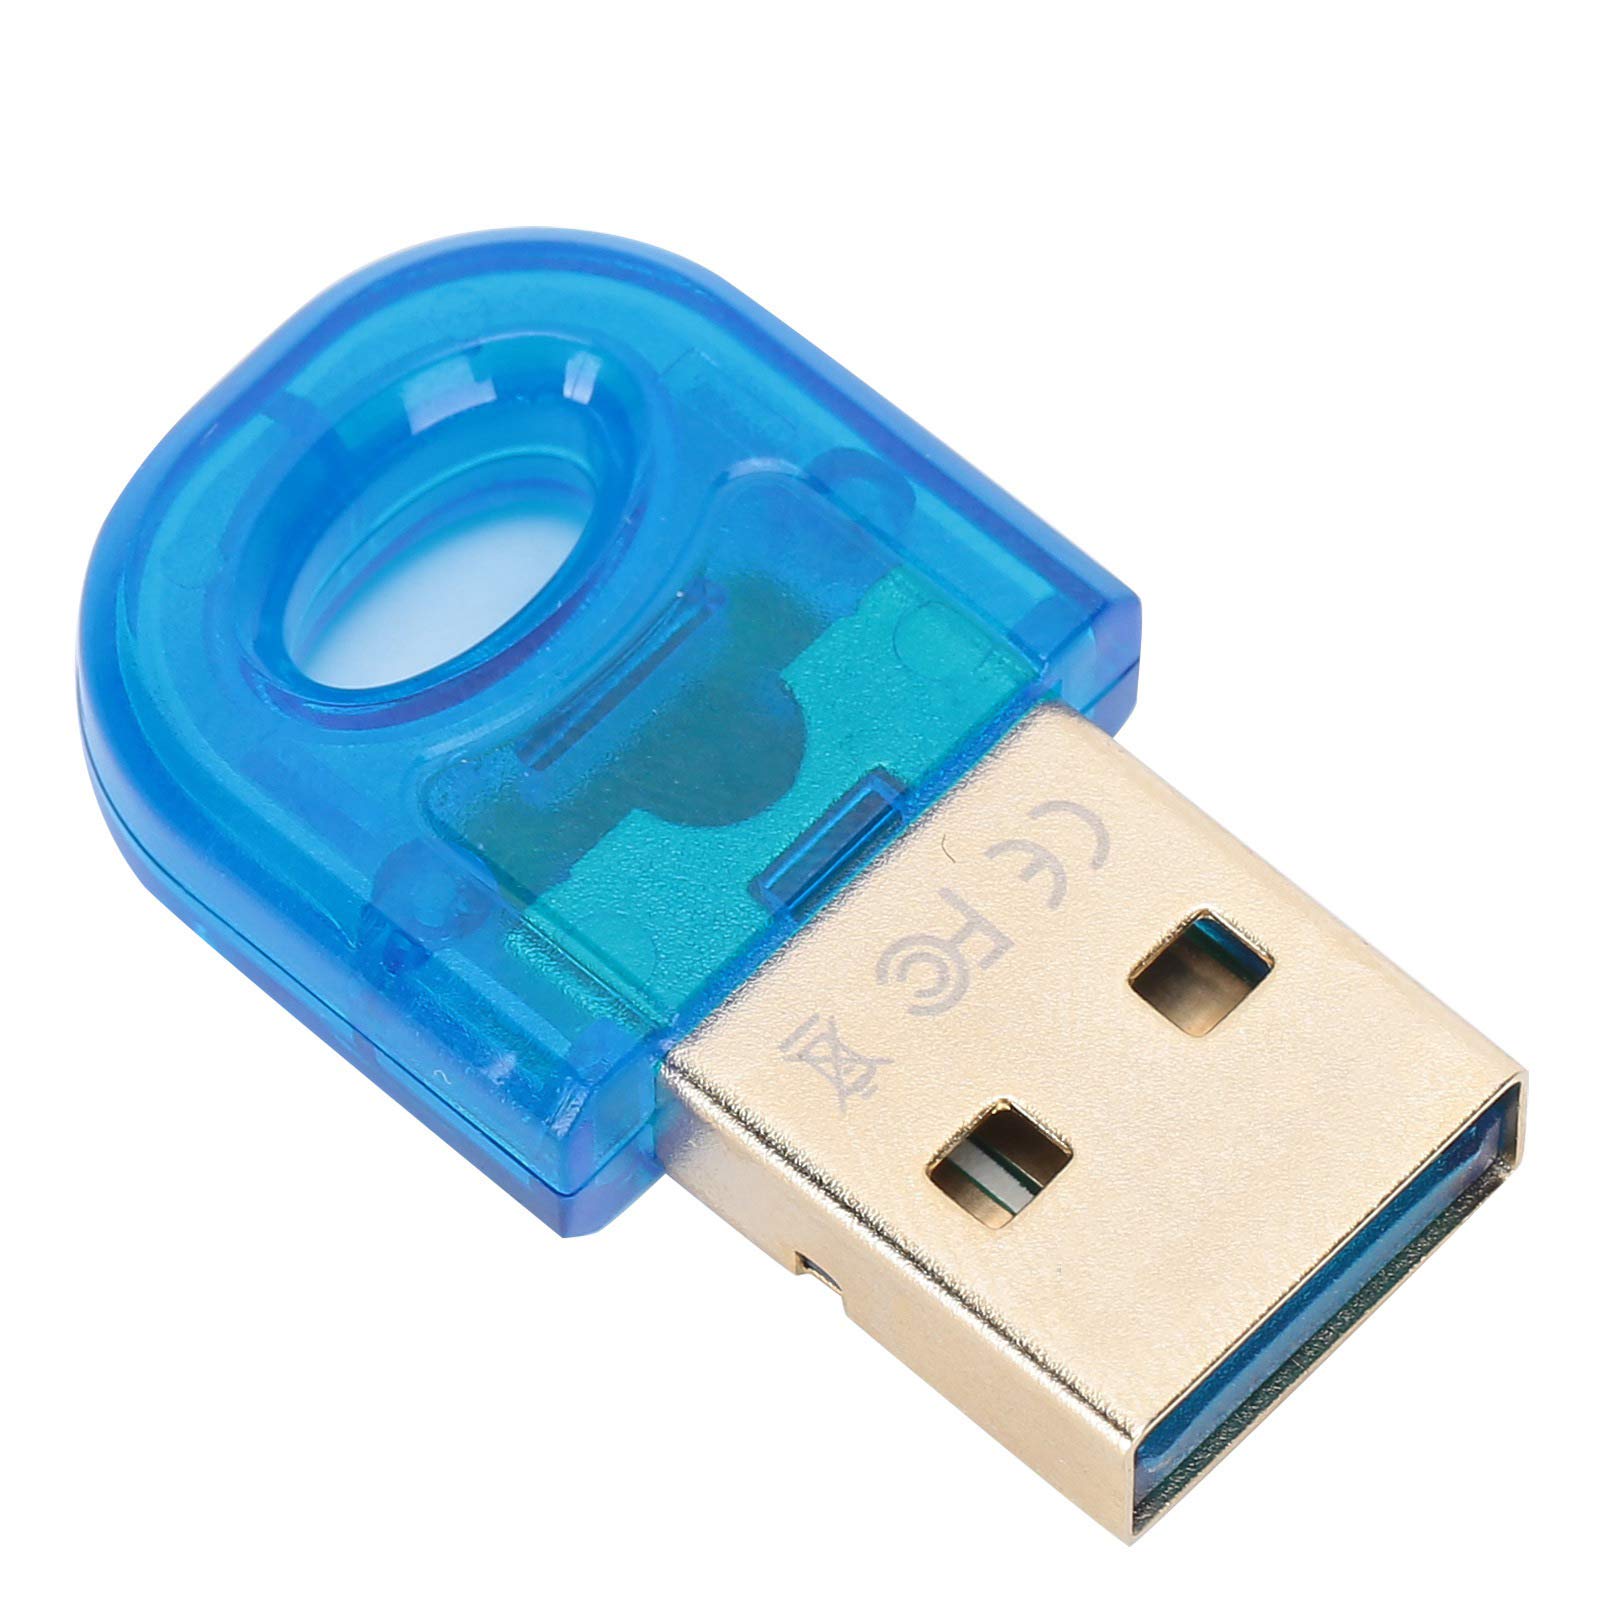 Heayzoki Bluetooth Receiver,Bluetooth Adapter 5.0 USB Receiver Transmitter Wireless Computer Accessories,USB Bluetooth Receiver ,for Wind